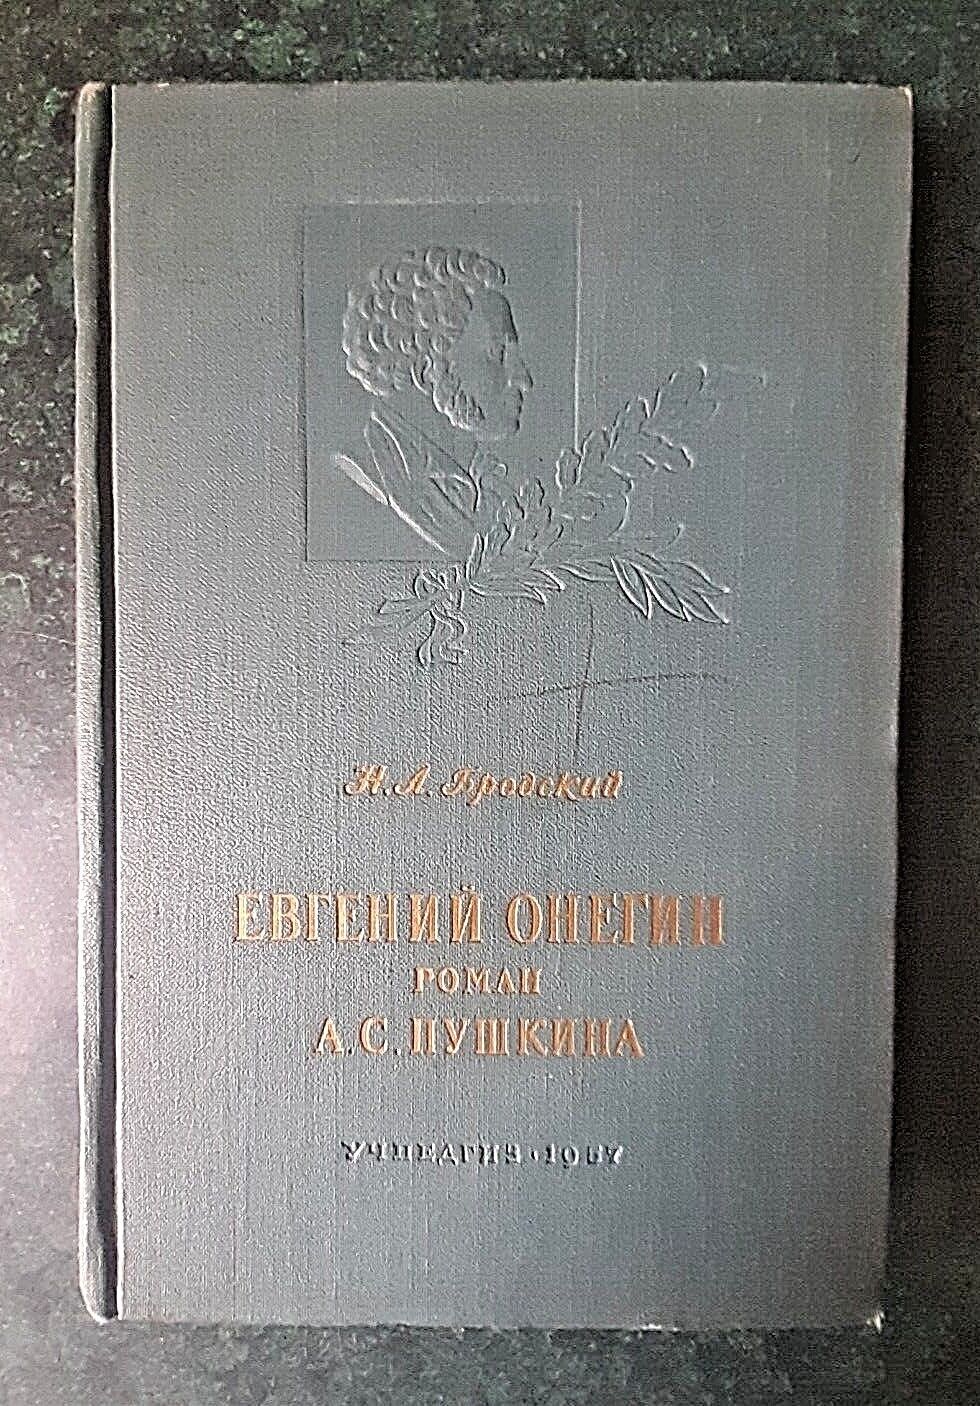 1957 Евгений Онегин Evgeniy Onegin Pushkin Novel Brodsky Comments Russian book